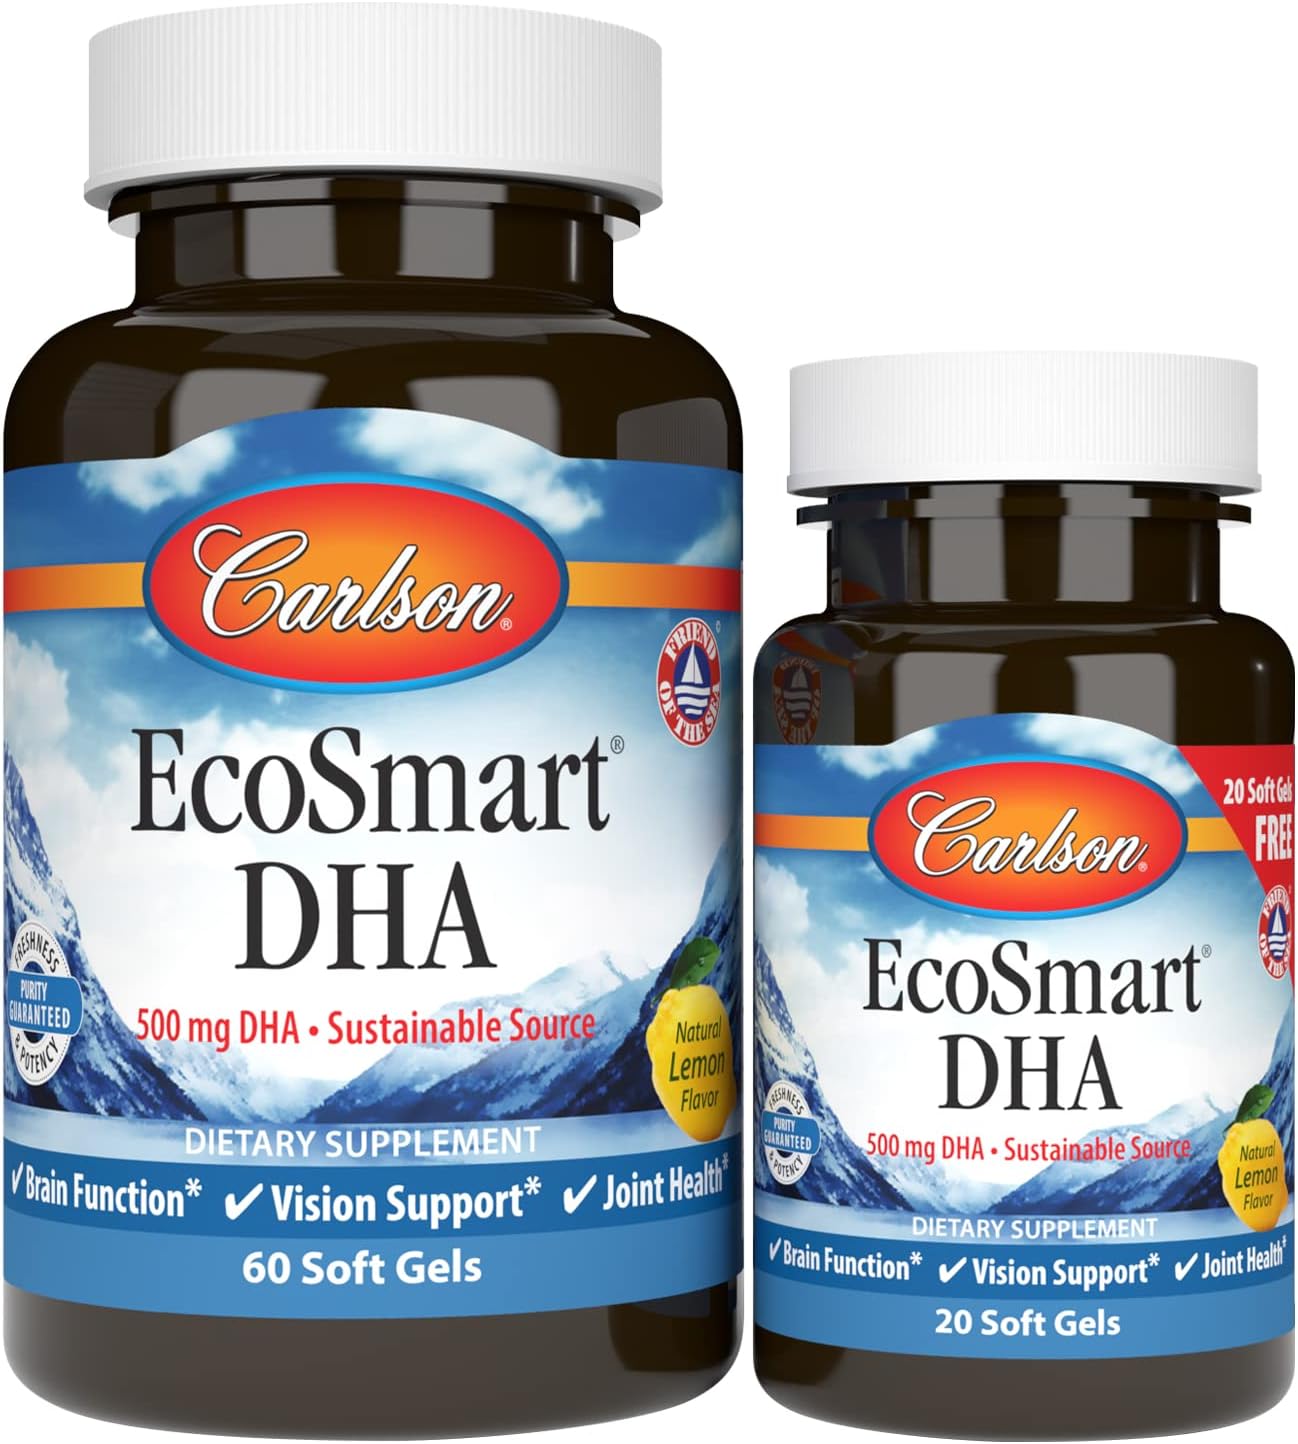 Carlson - EcoSmart DHA, 500 mg DHA, Sustainable Source, Healthy Vision & Brain Function, Lemon, 60+20 Softgels